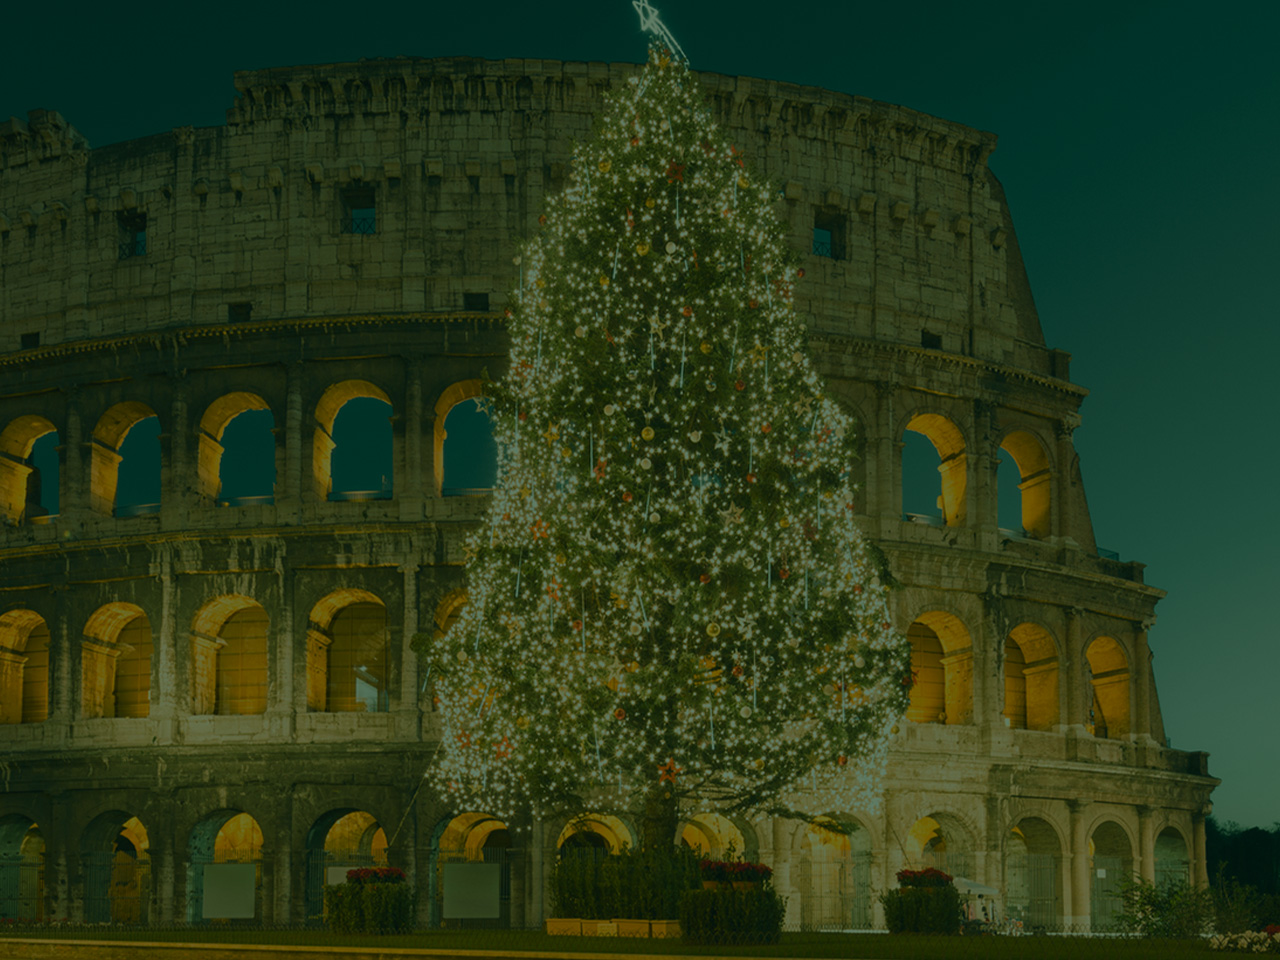 Italian Christmas Traditions